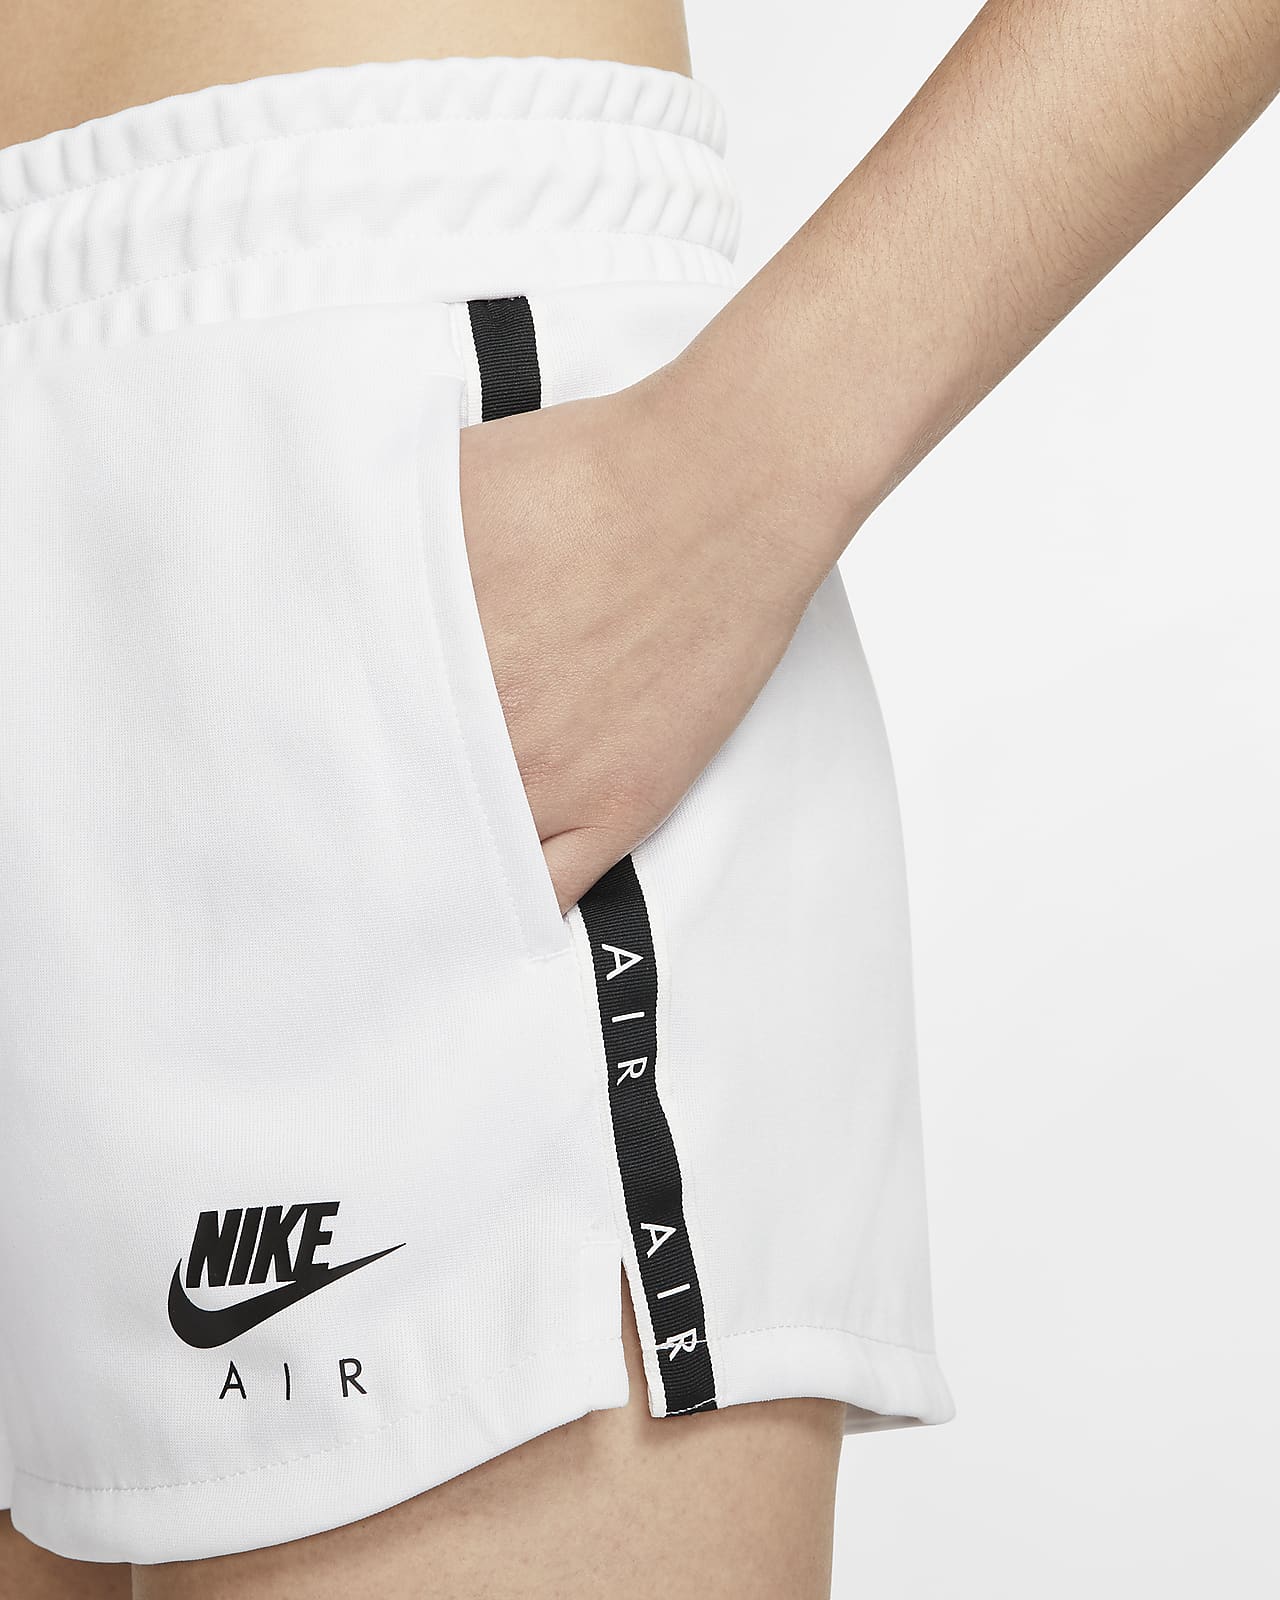 Nike Air Women's Shorts. Nike AT